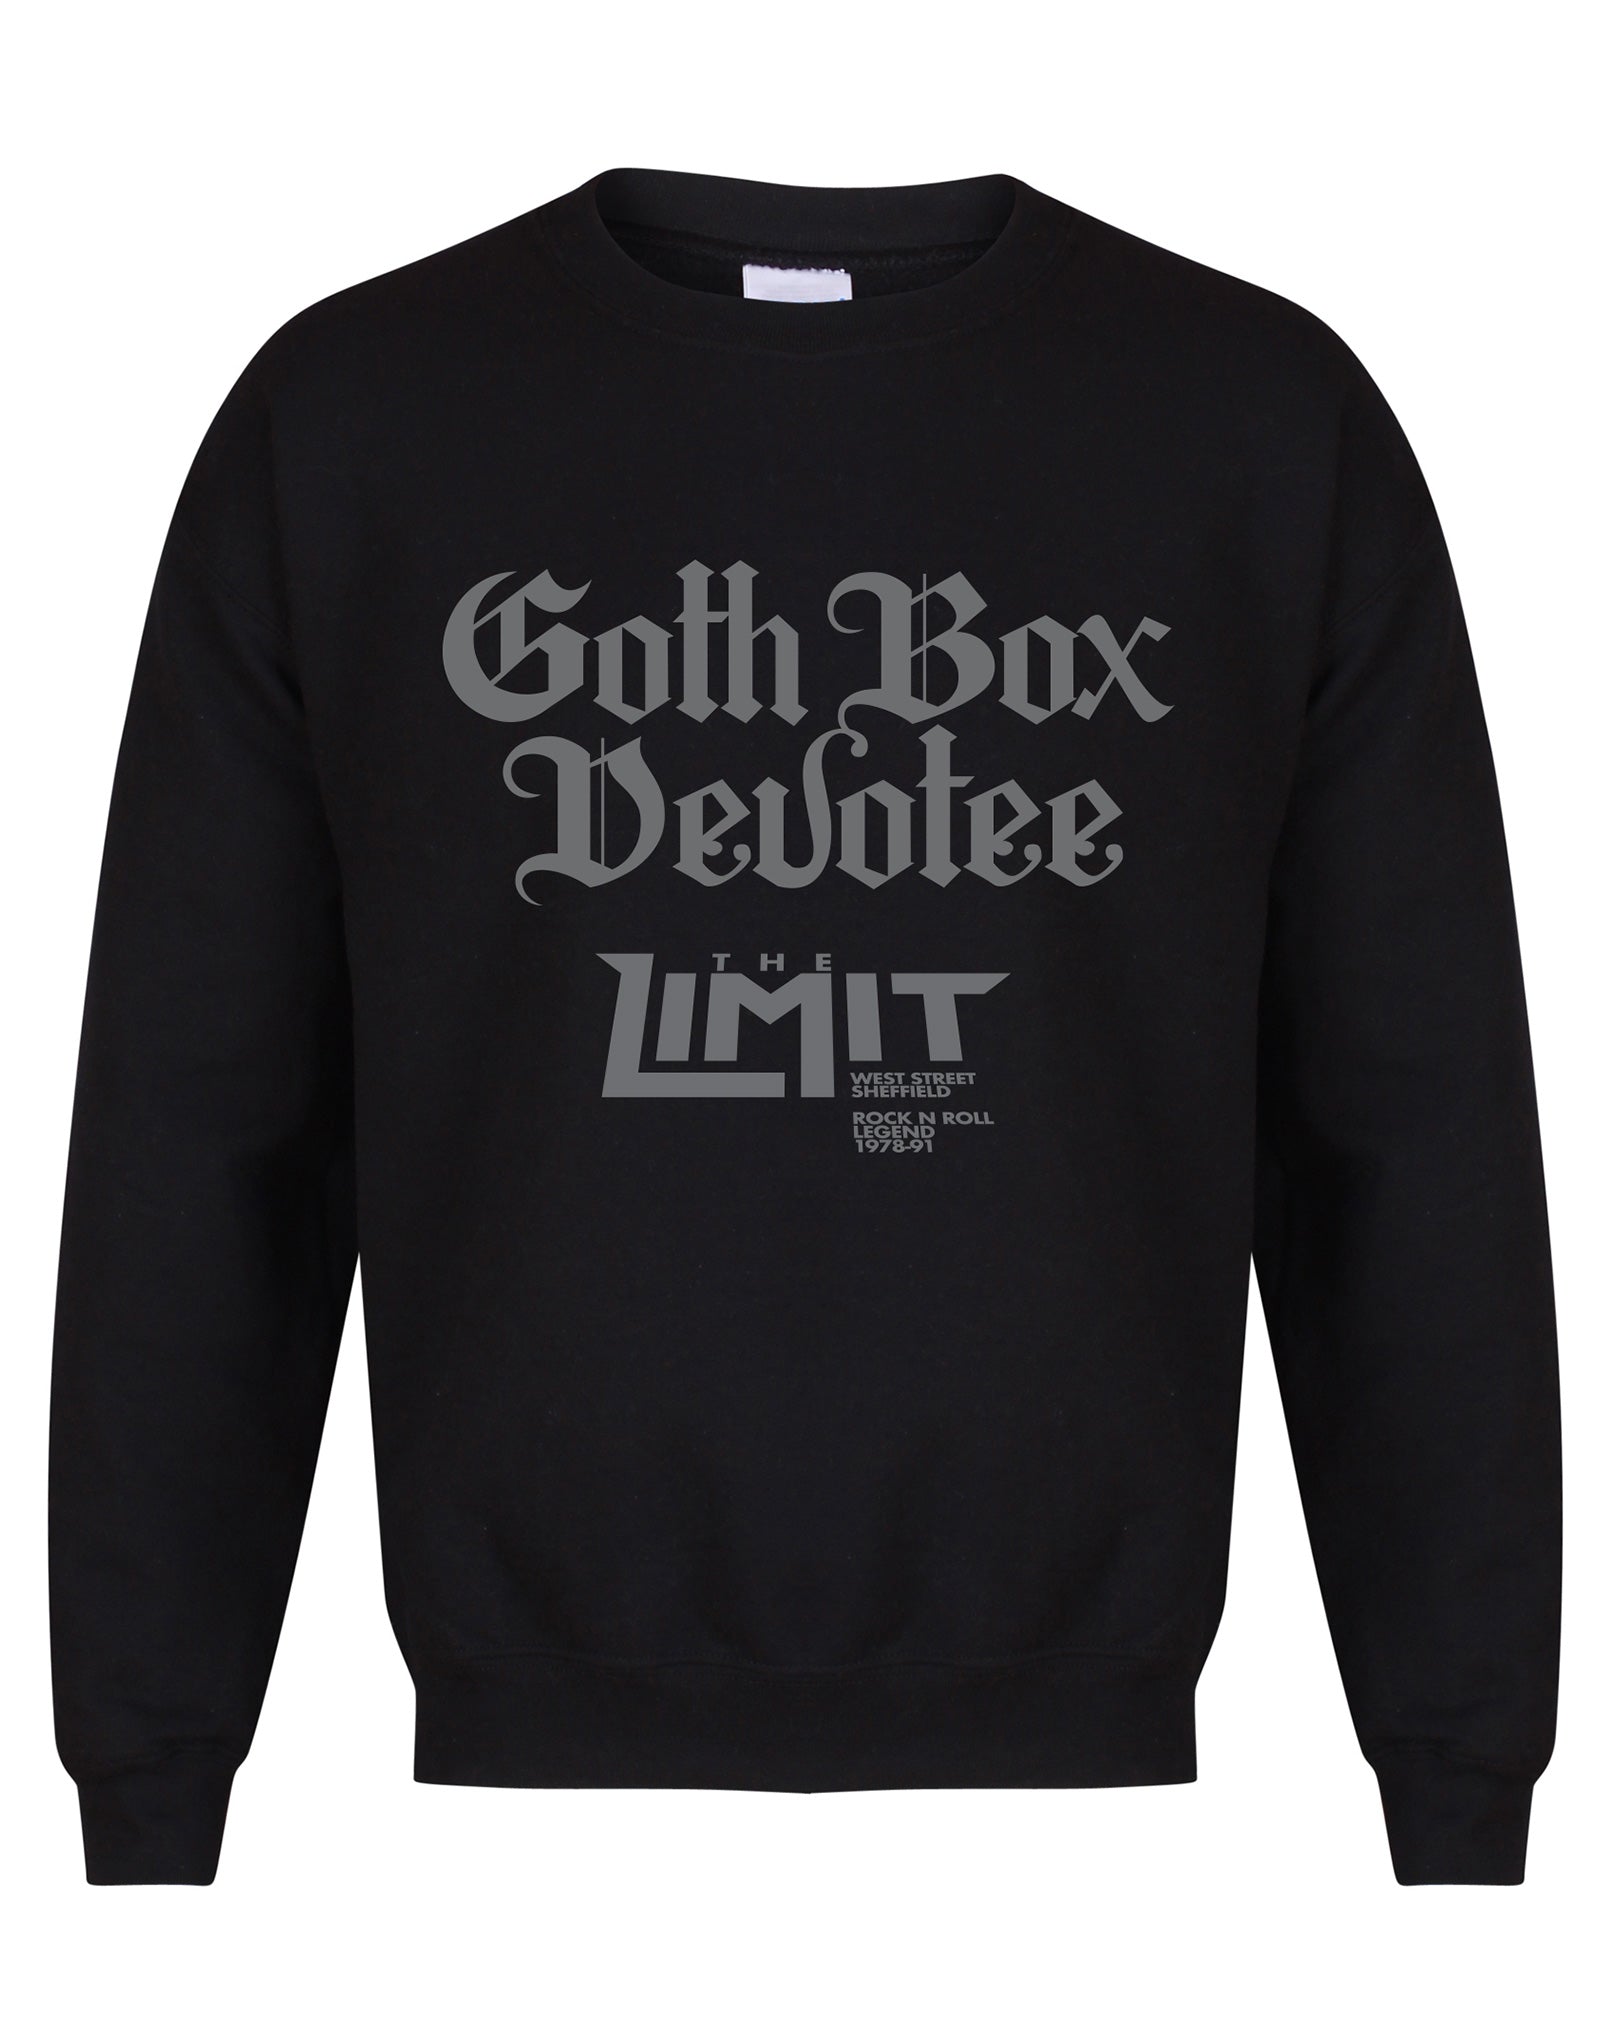 Limit Goth Box Devotee unisex fit sweatshirt - various colours - Dirty Stop Outs